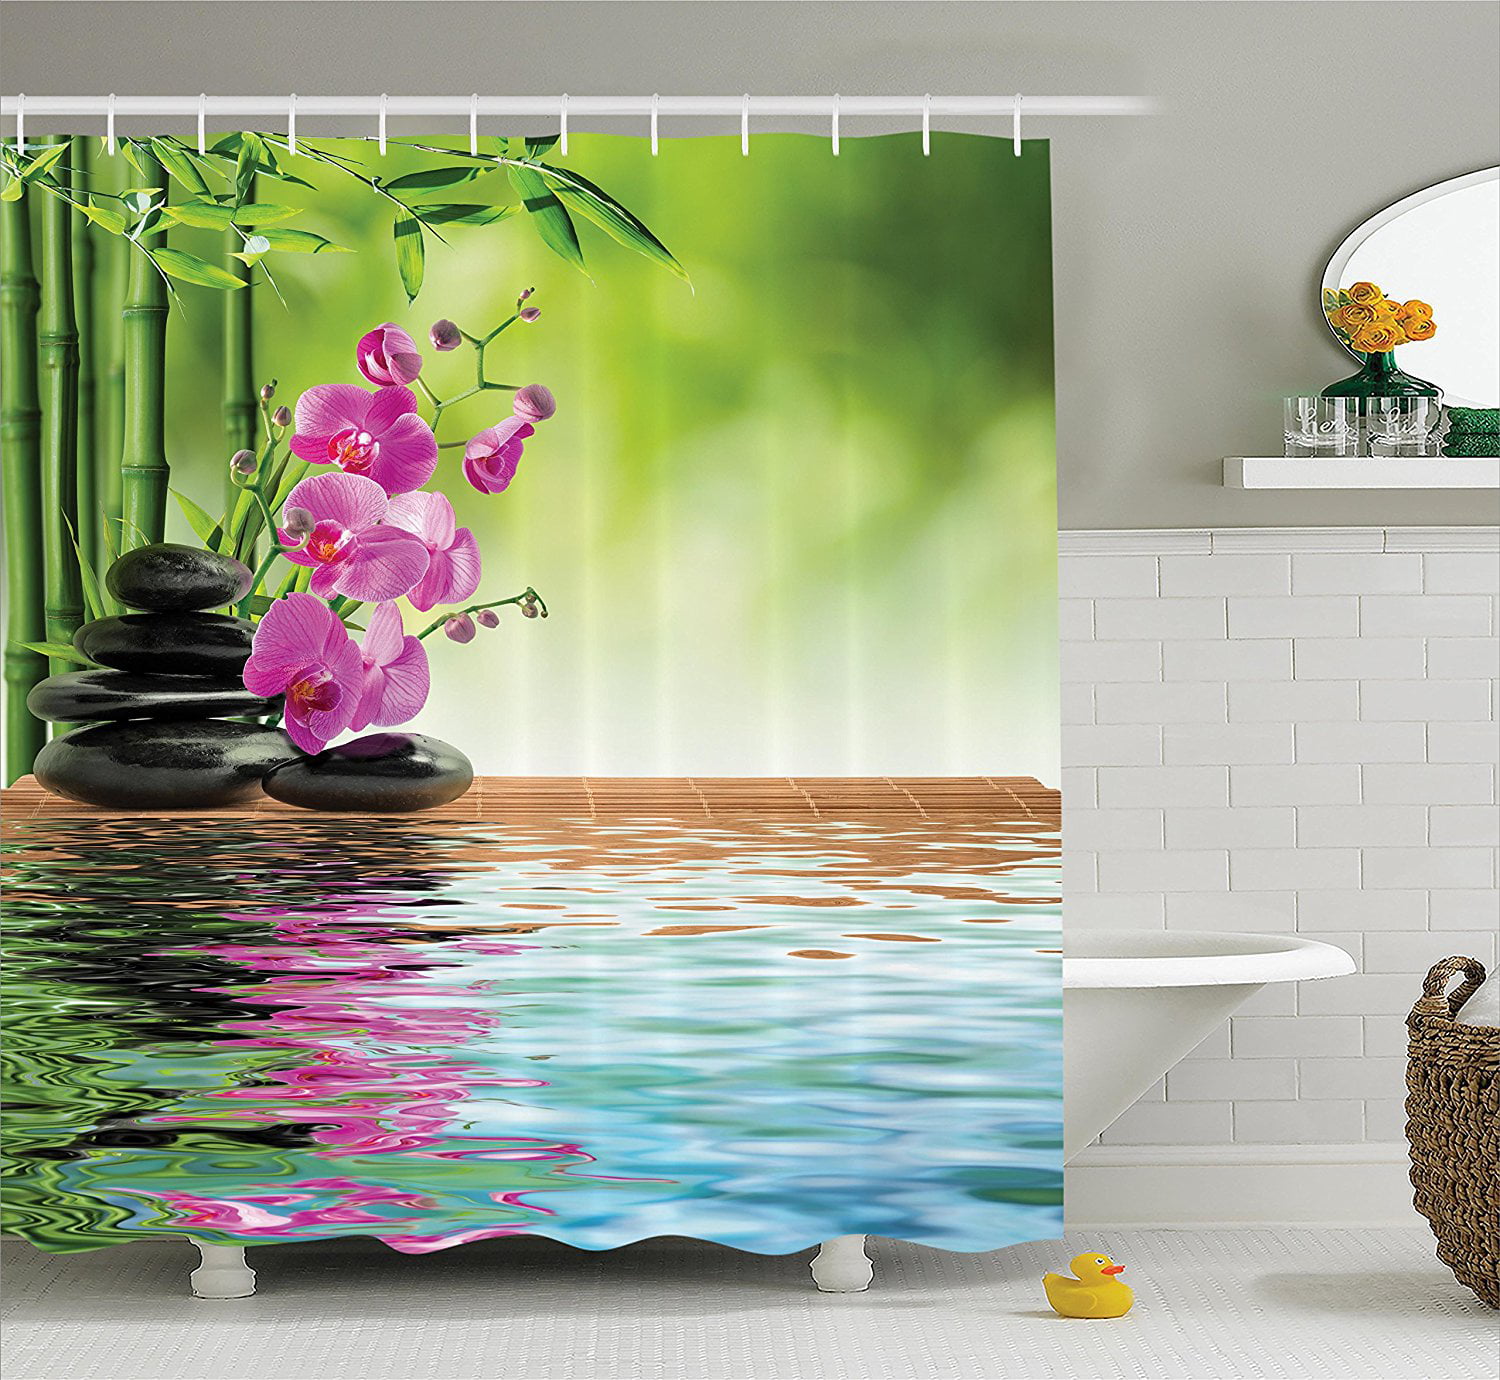 Details about   Floral Orchid Wellness Classic Modern Waterproof Bath Drape Shower Curtains DIY 